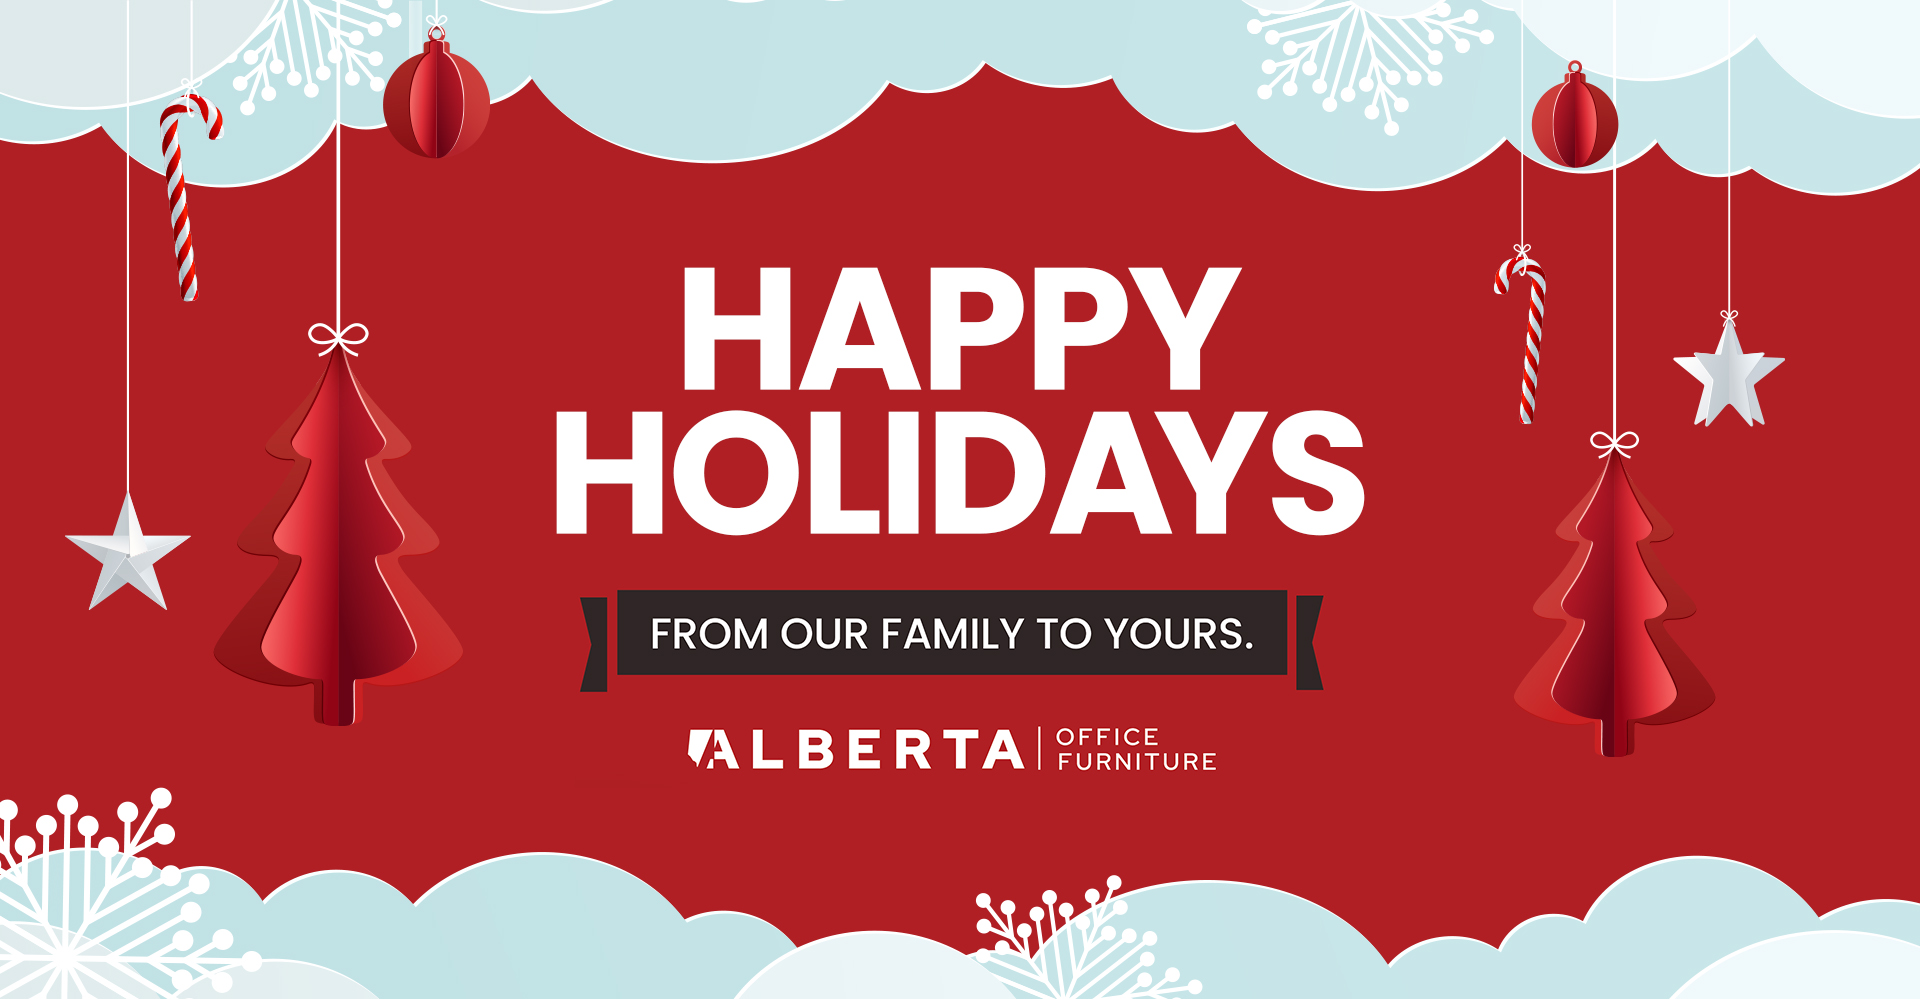 Alberta Office Furniture Happy Holidays